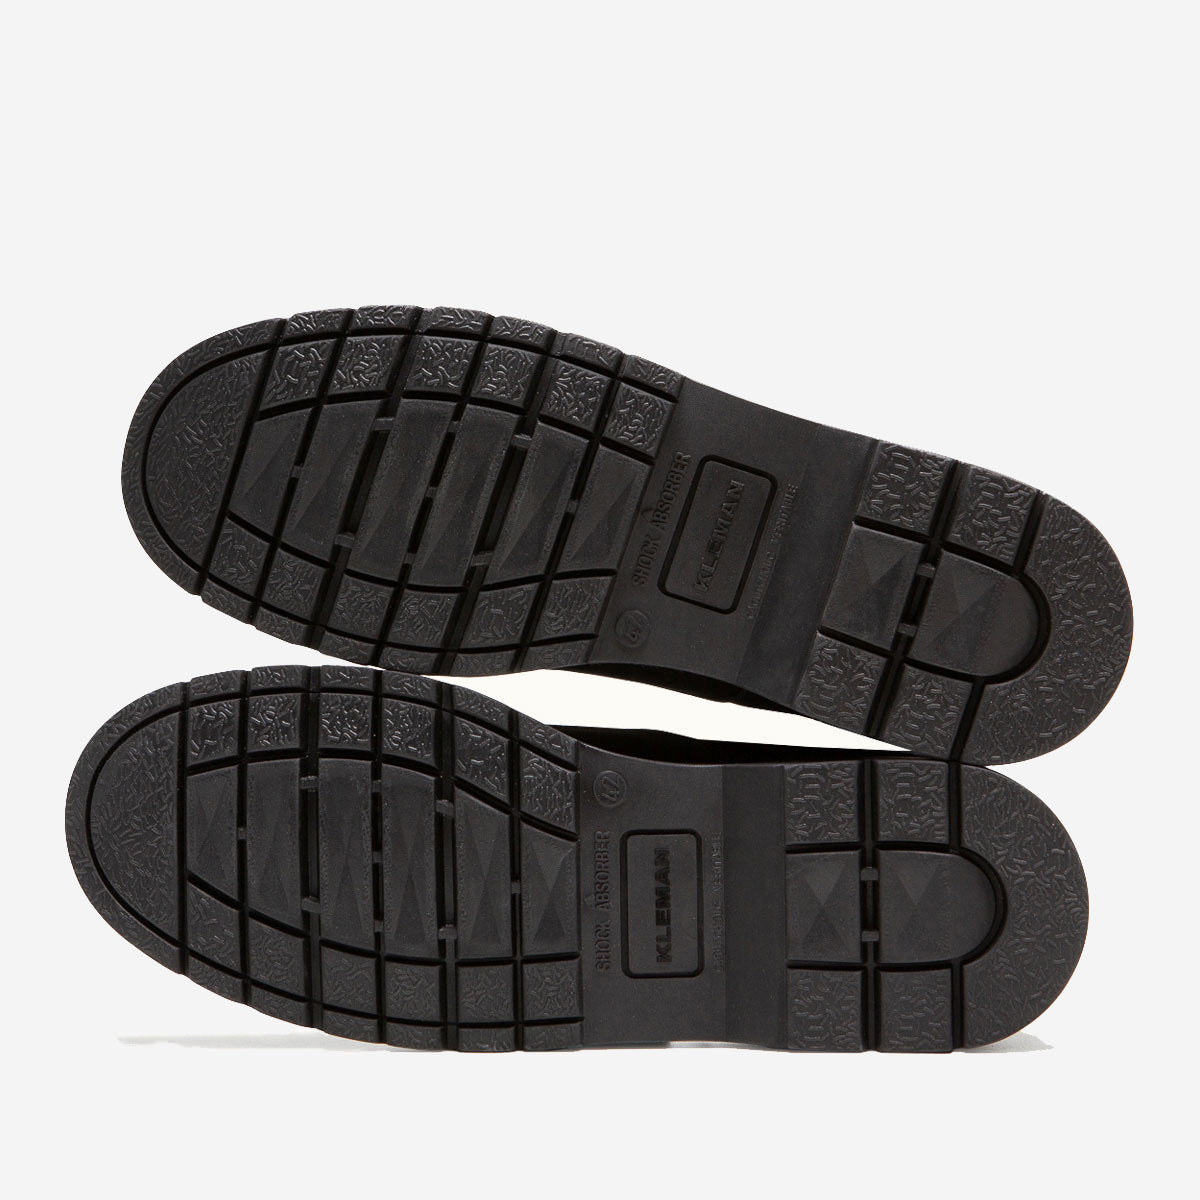 Galon N Nubuck Leather Strap Boots - Black